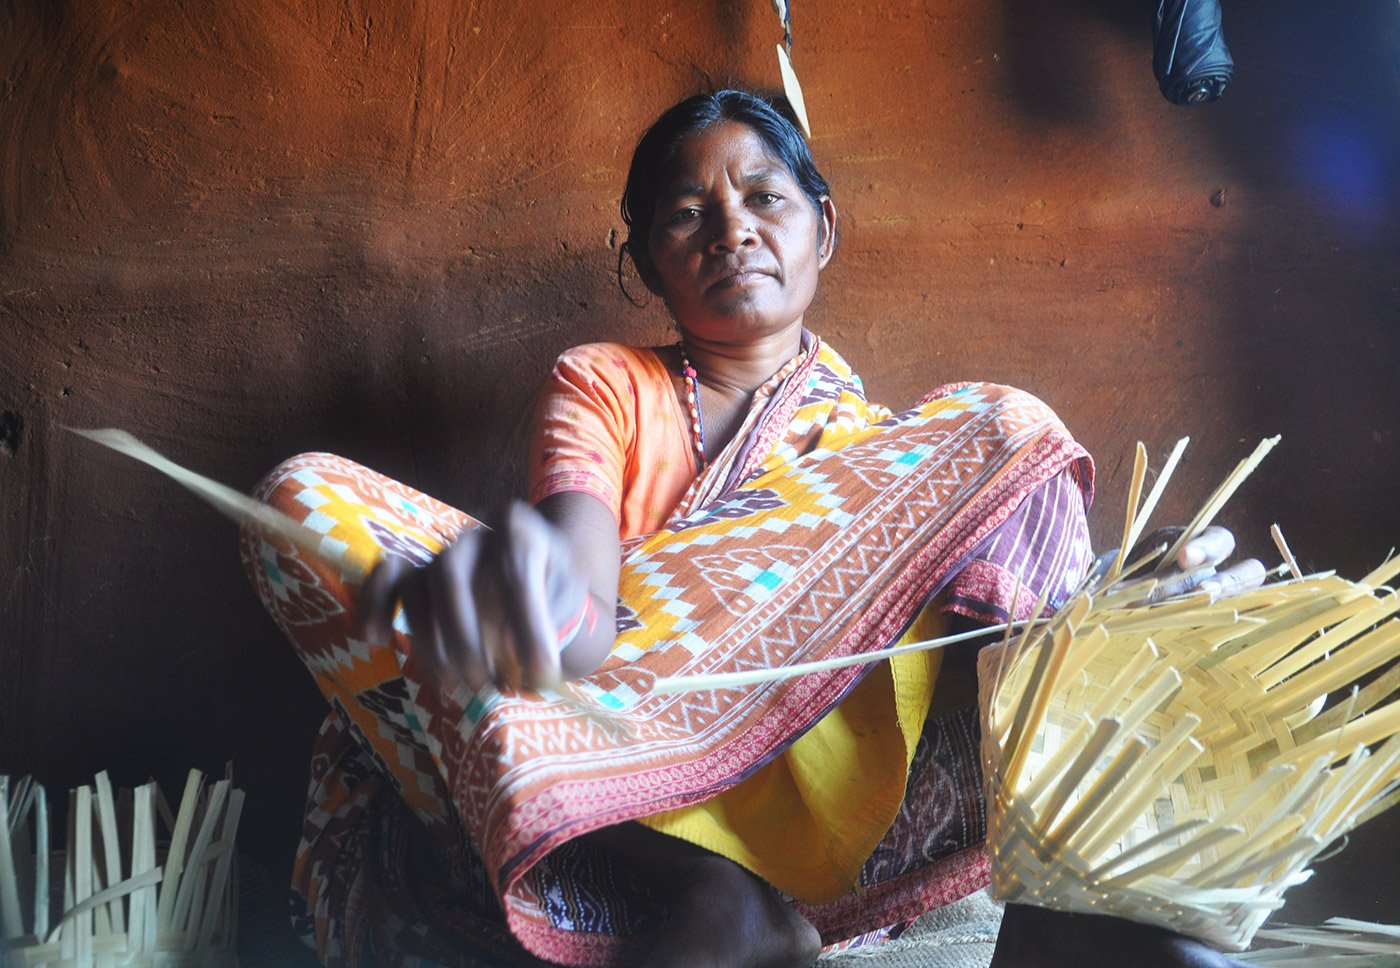 Kamla Paharia weaving baskets